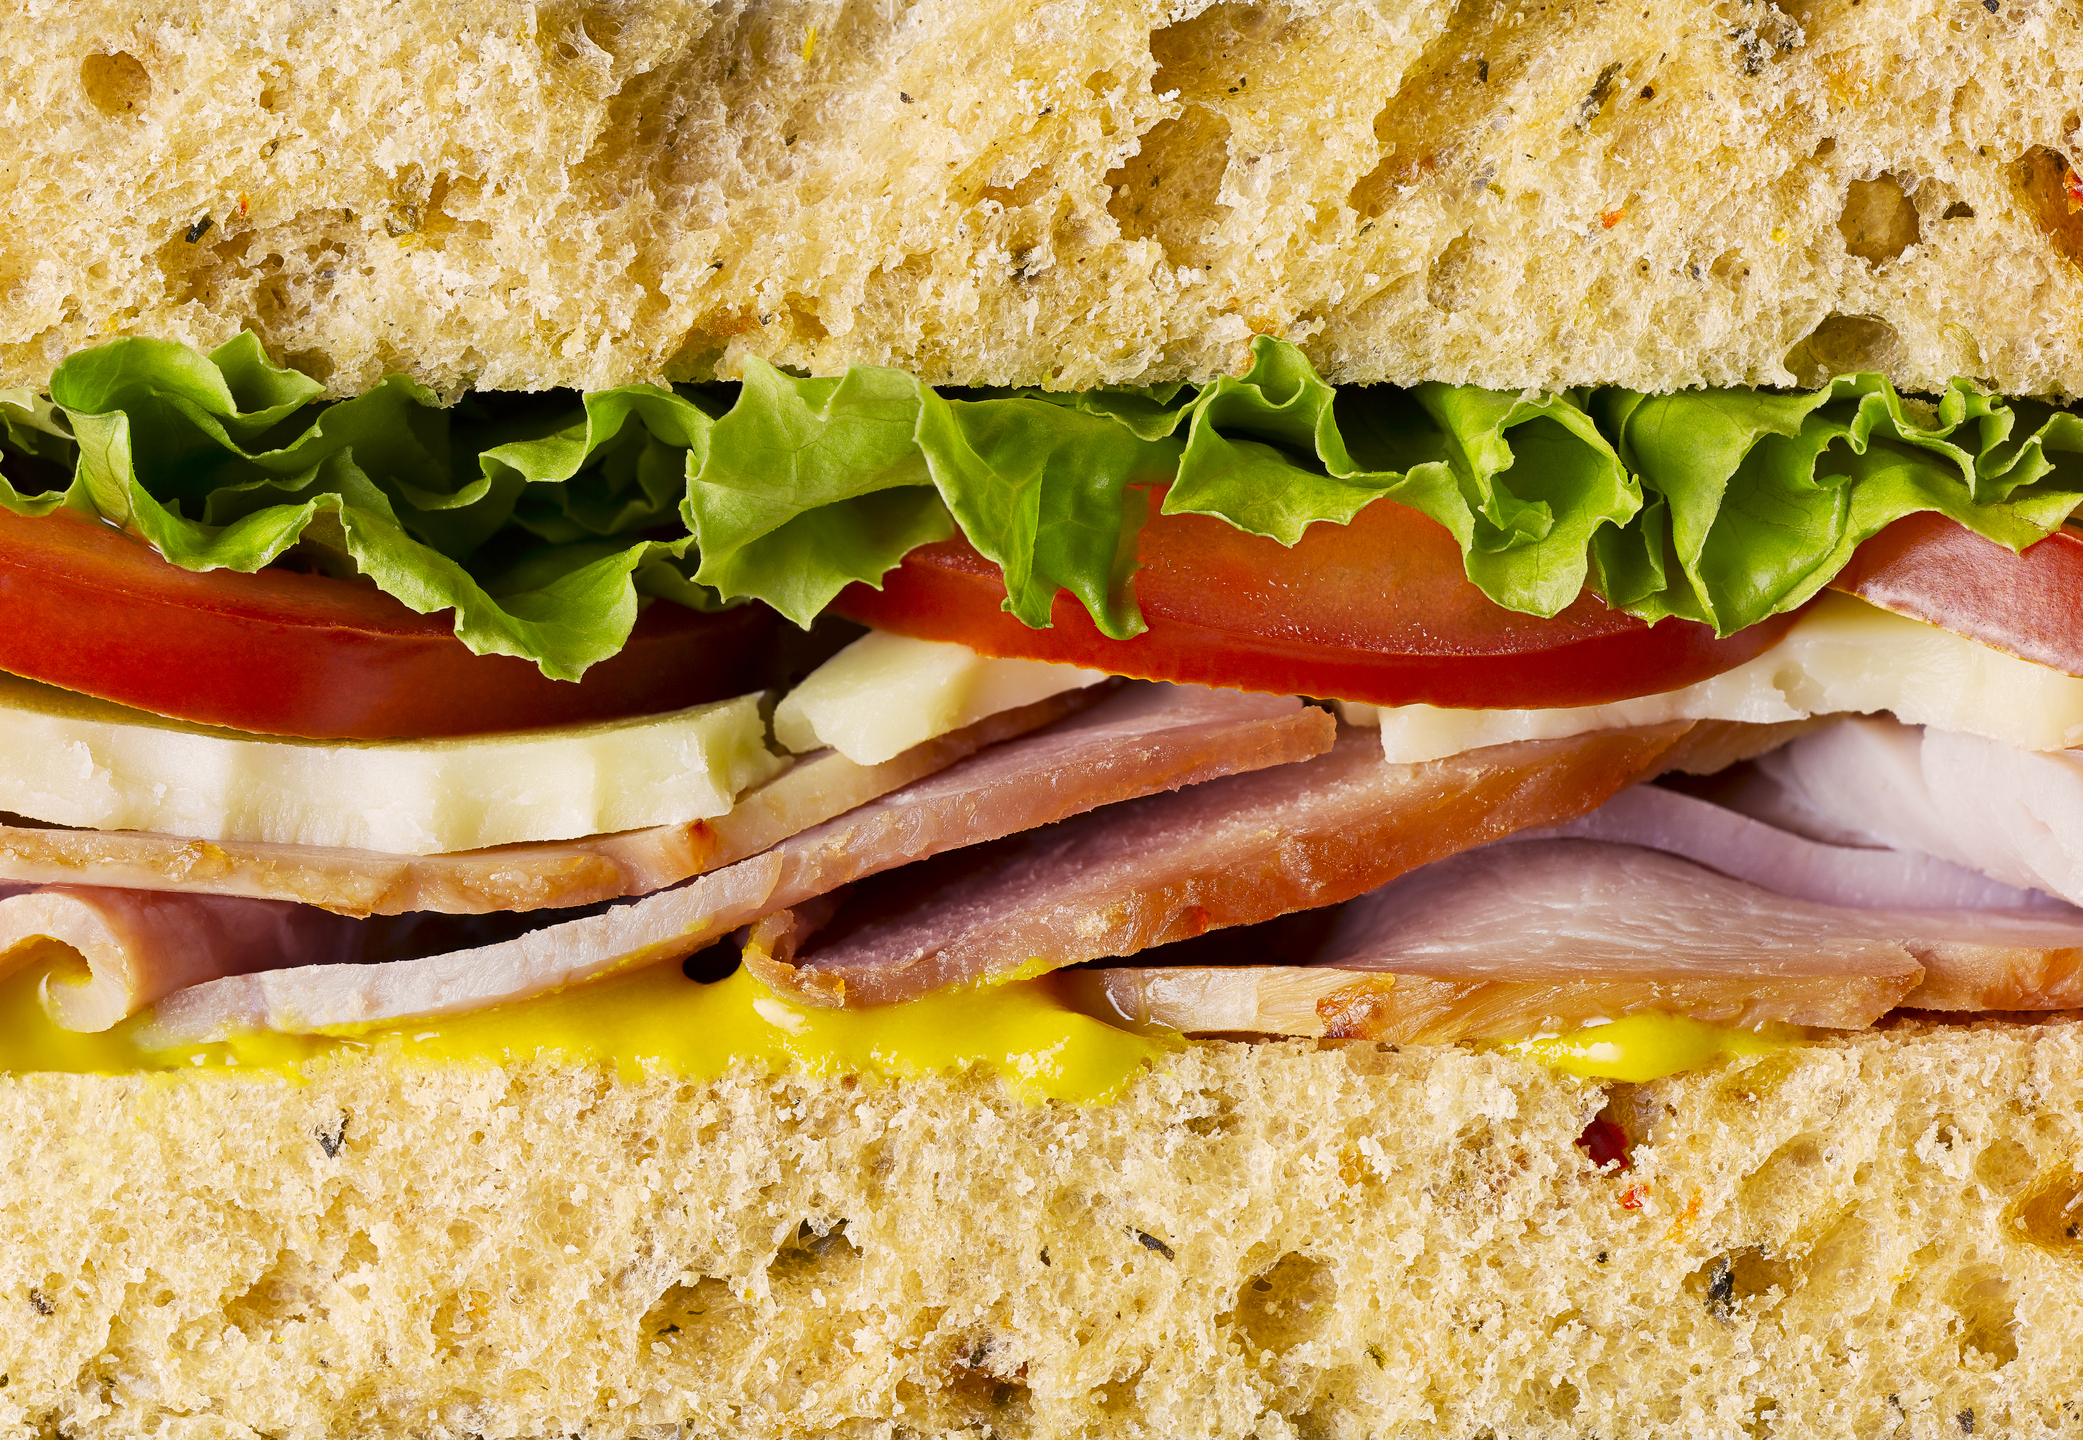 A close-up of a ham sandwich.